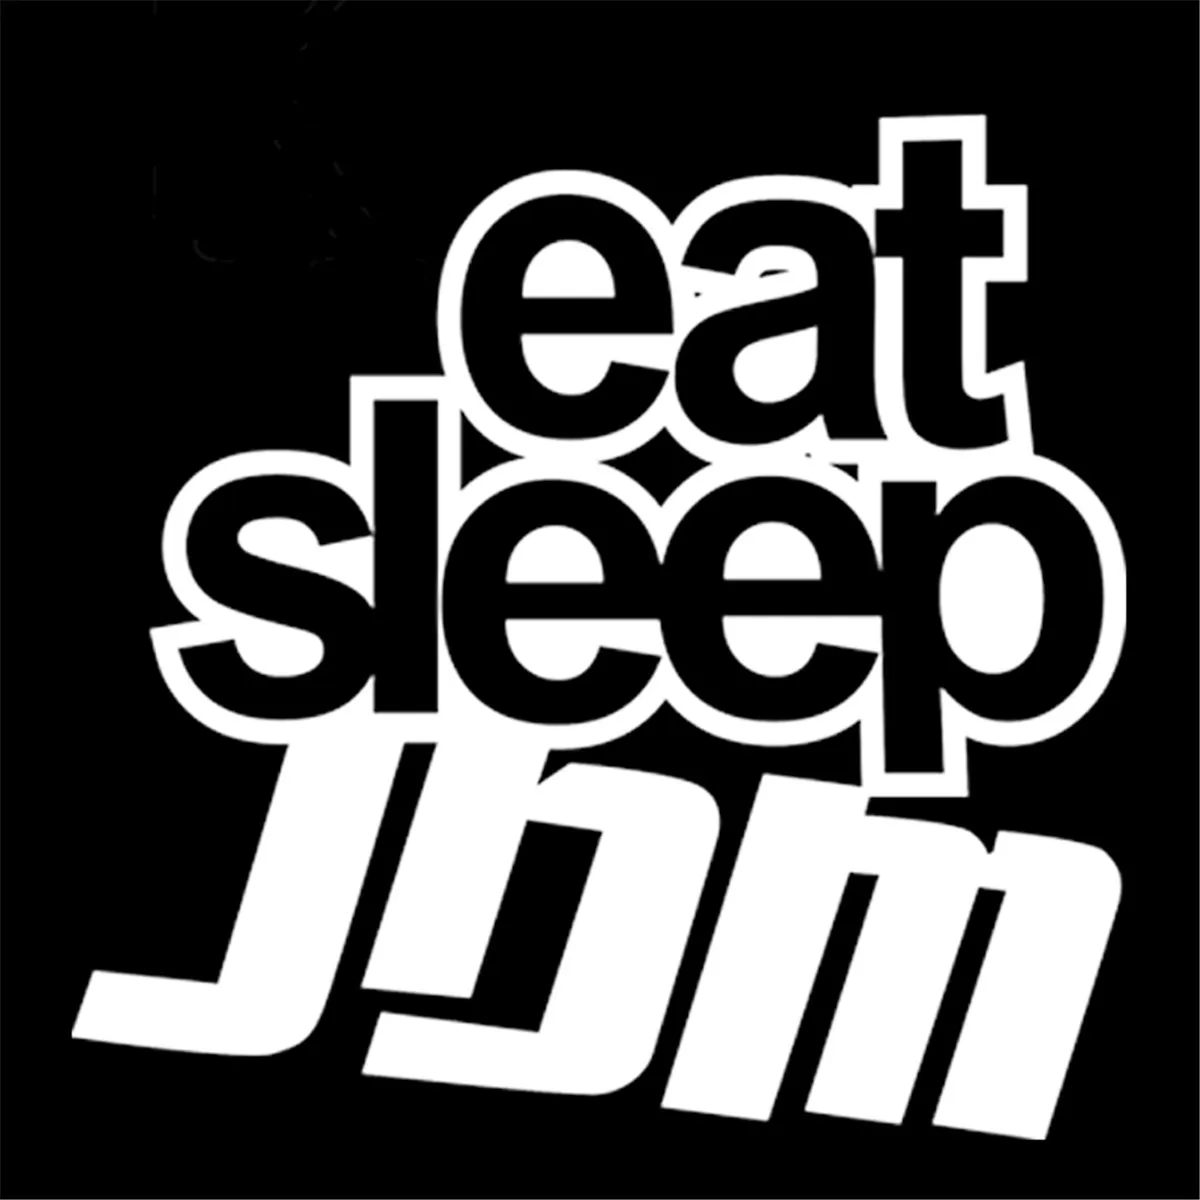 eat sleep jdm wallpaper